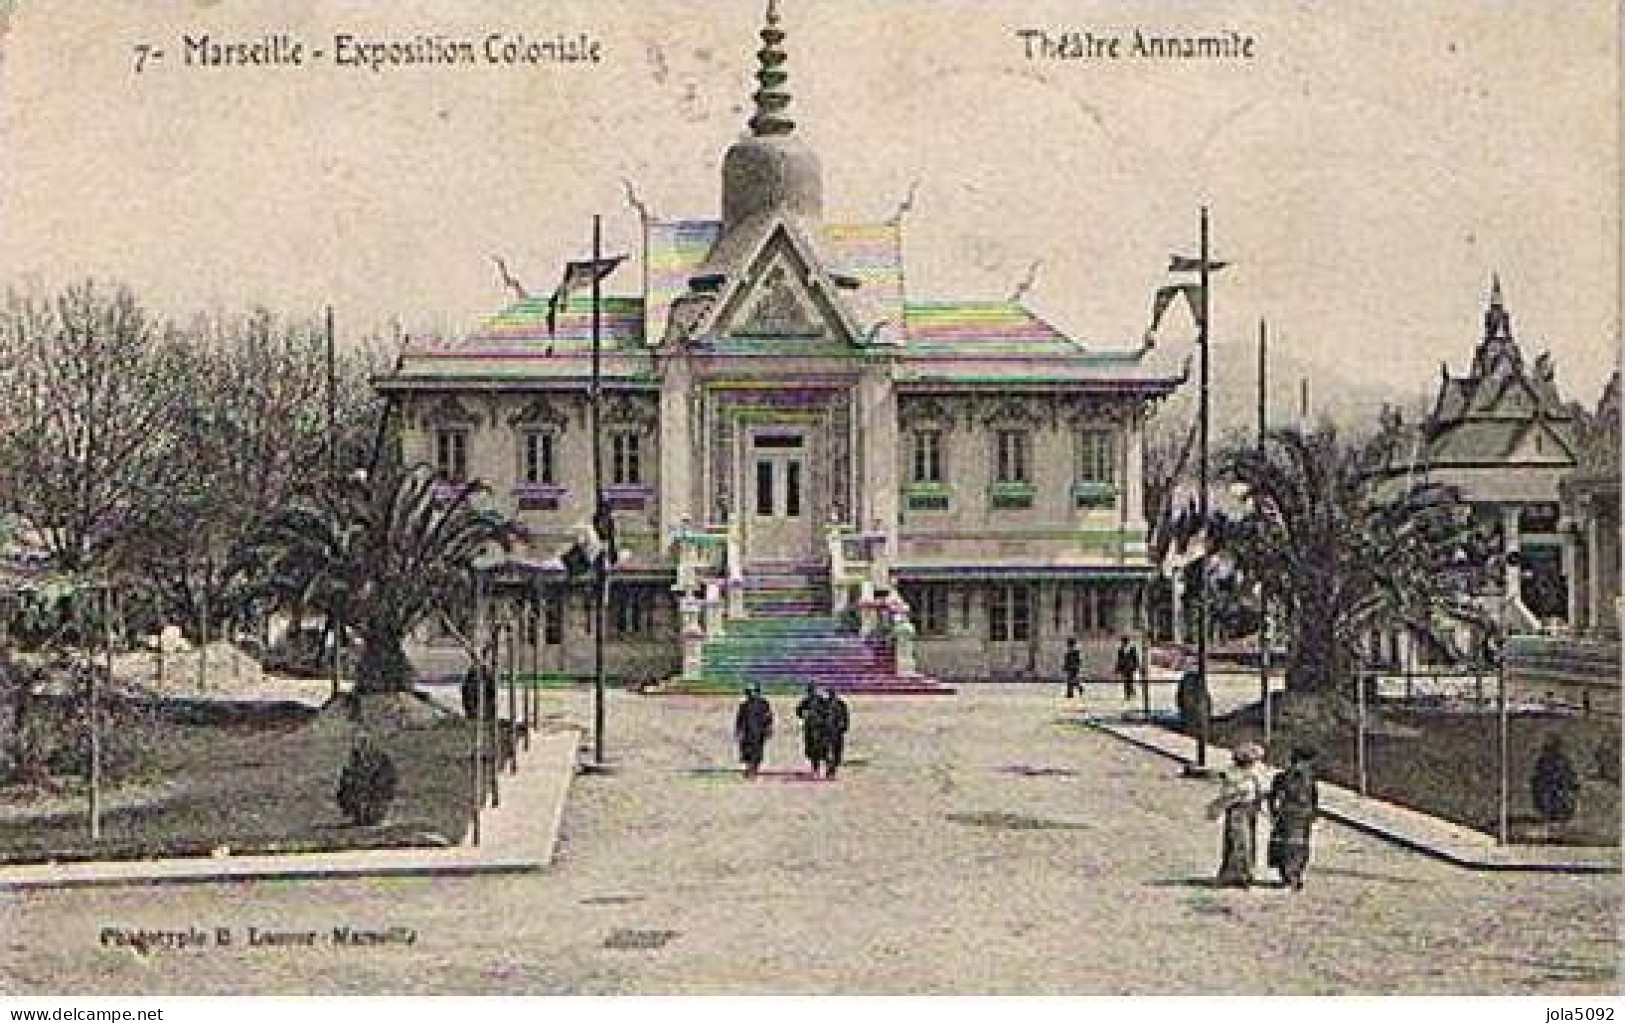 13 - MARSEILLE - Exposition Coloniale - Théâtre Annamite - Exposiciones Coloniales 1906 - 1922